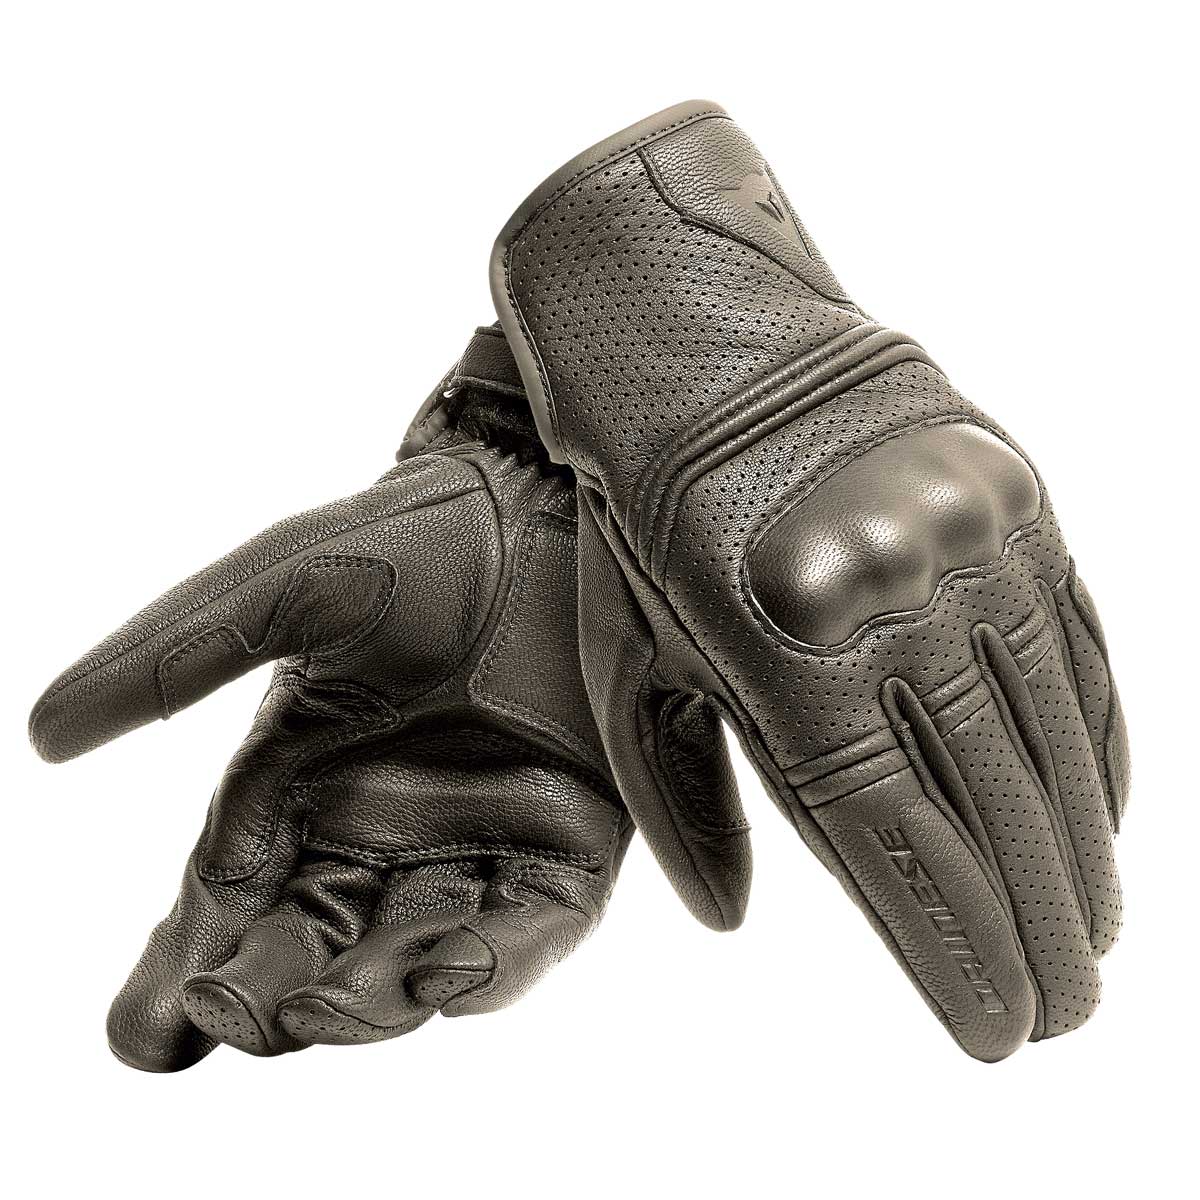 TESTEDS: Dainese Corbin Air gloves offer great feel